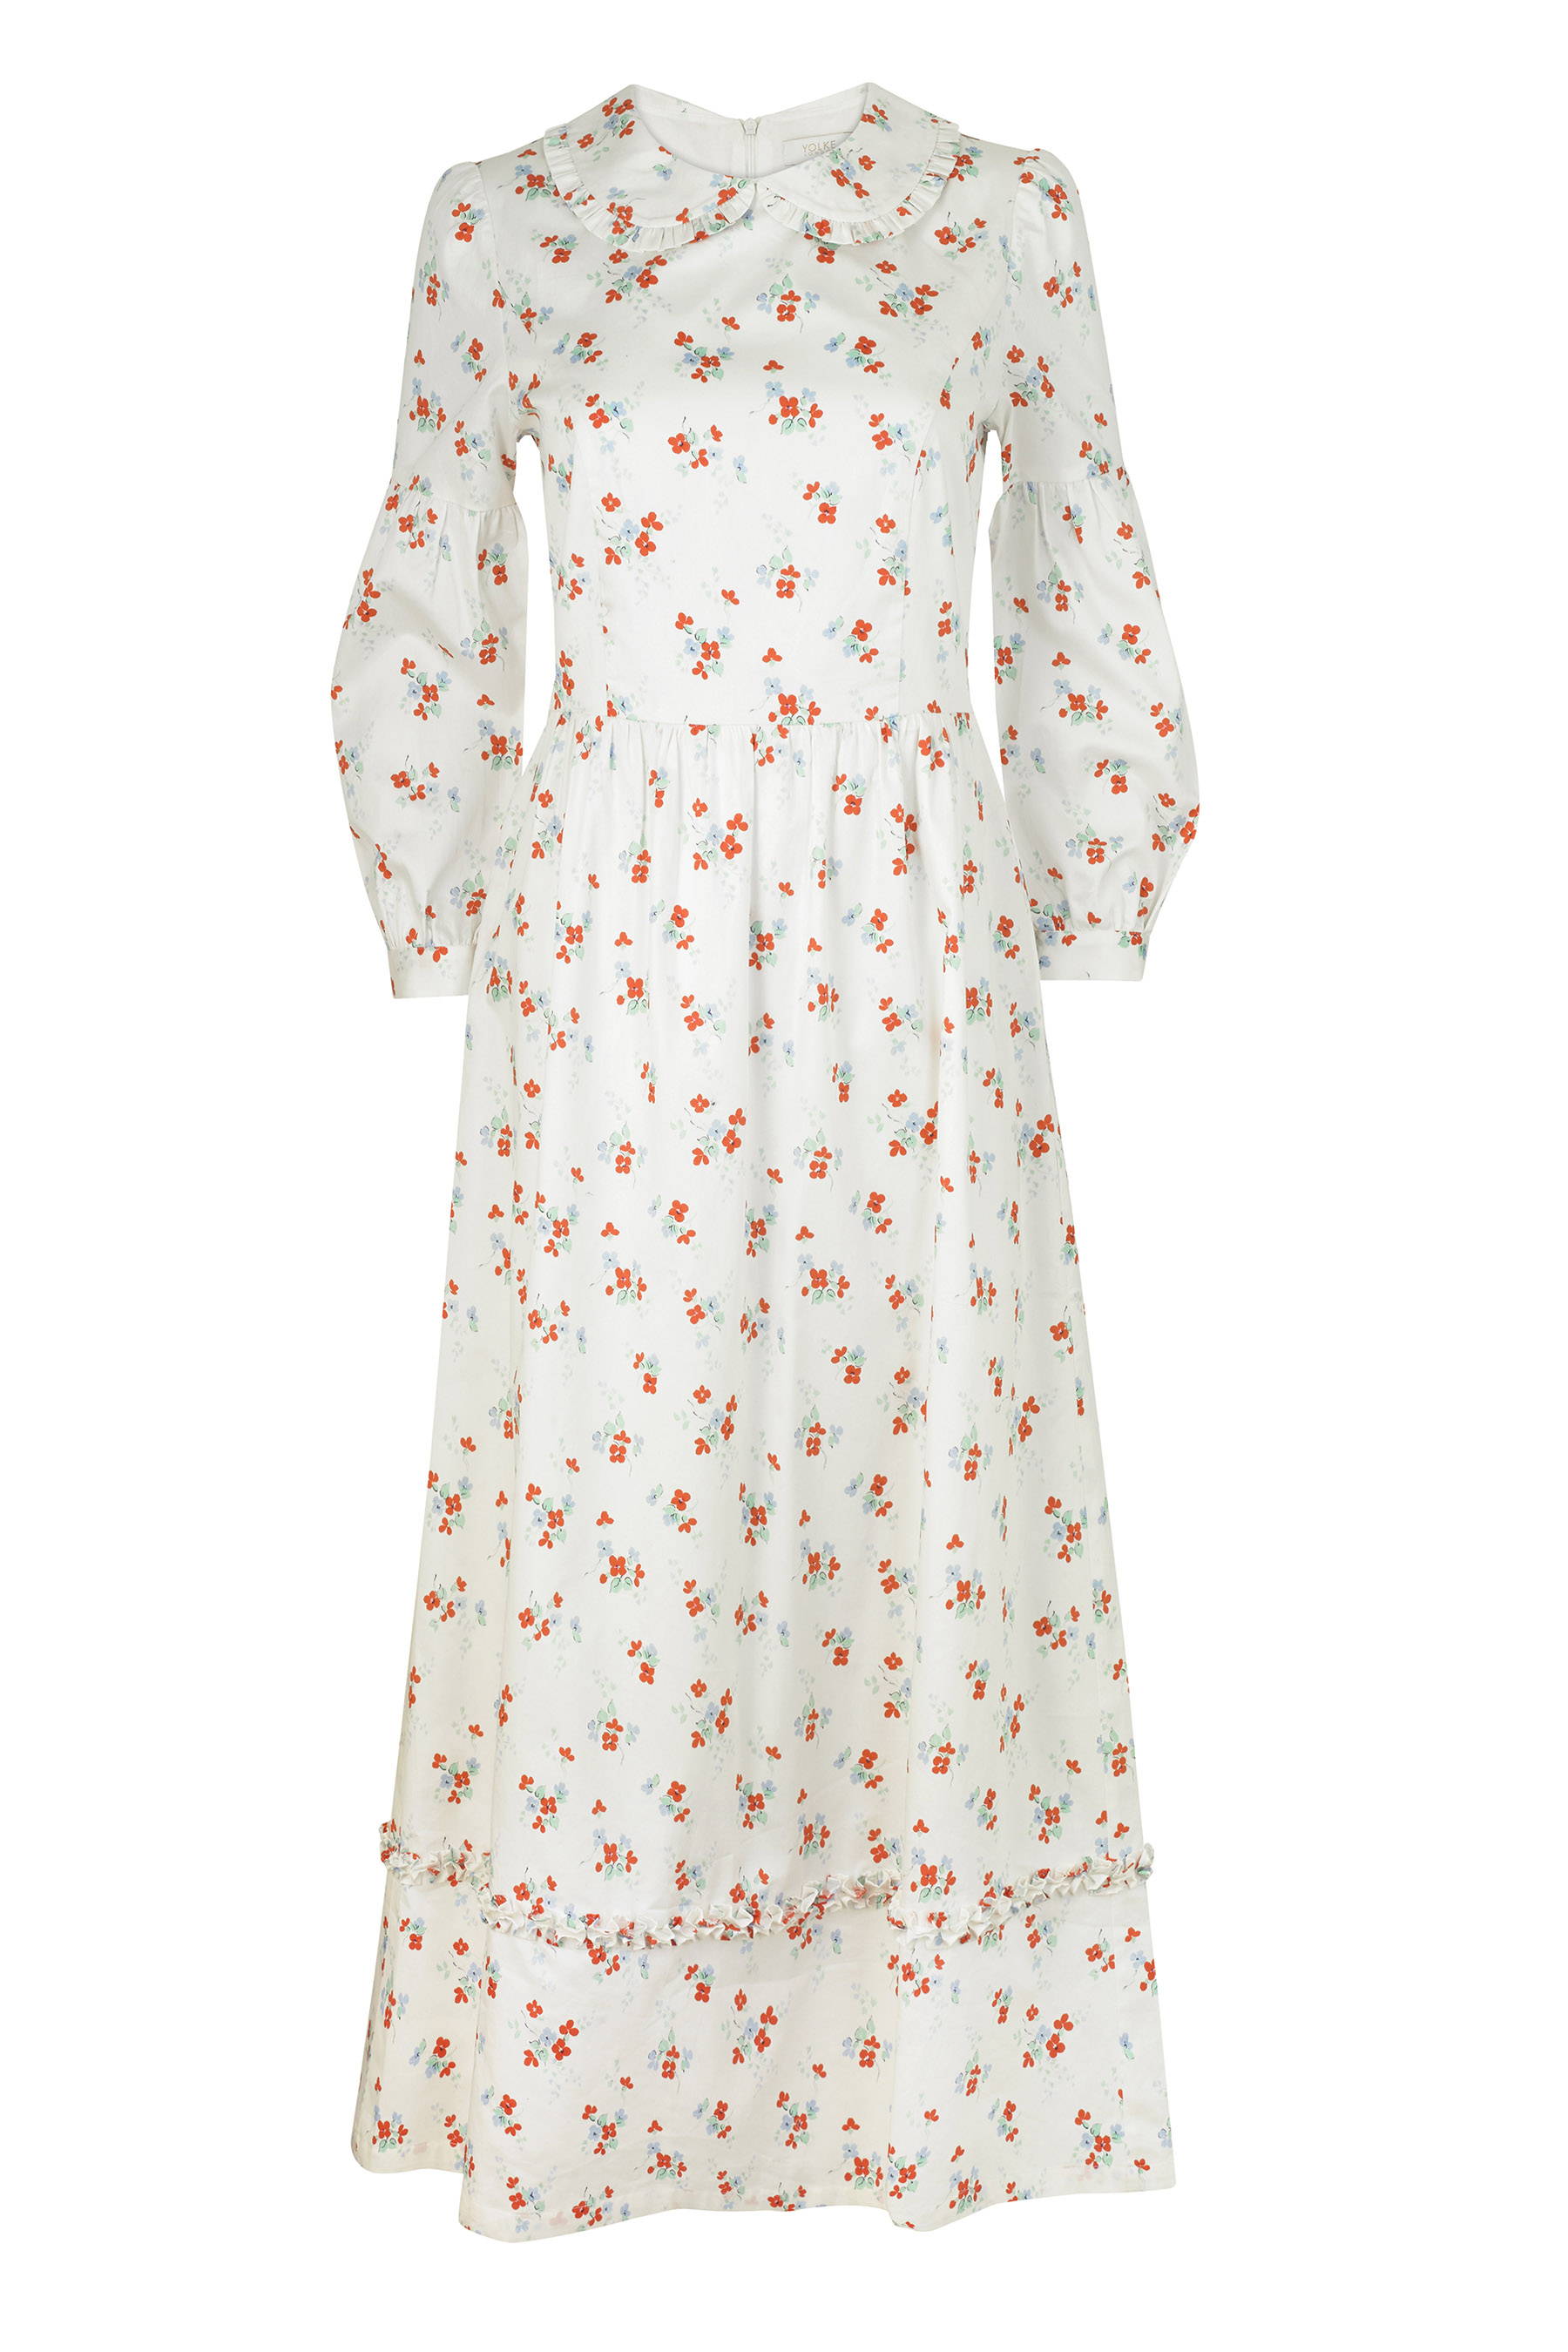 YOLKE Blossom Print Ophelia Dress